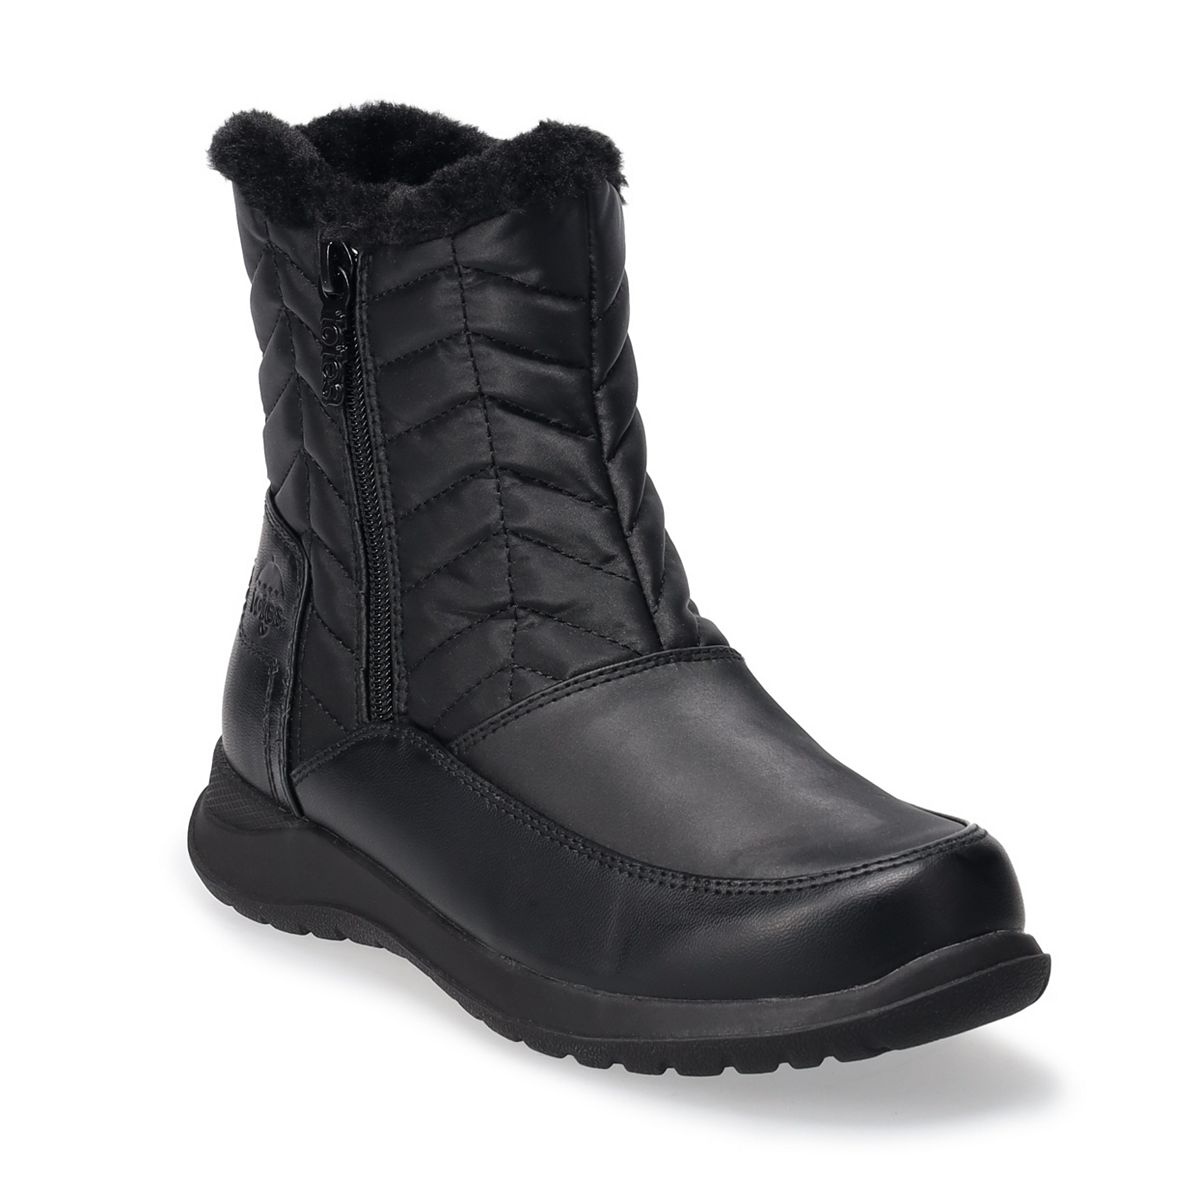 Totes Women's Jara Waterproof Snow Boots (Black) $14 + Free Shipping on $49+